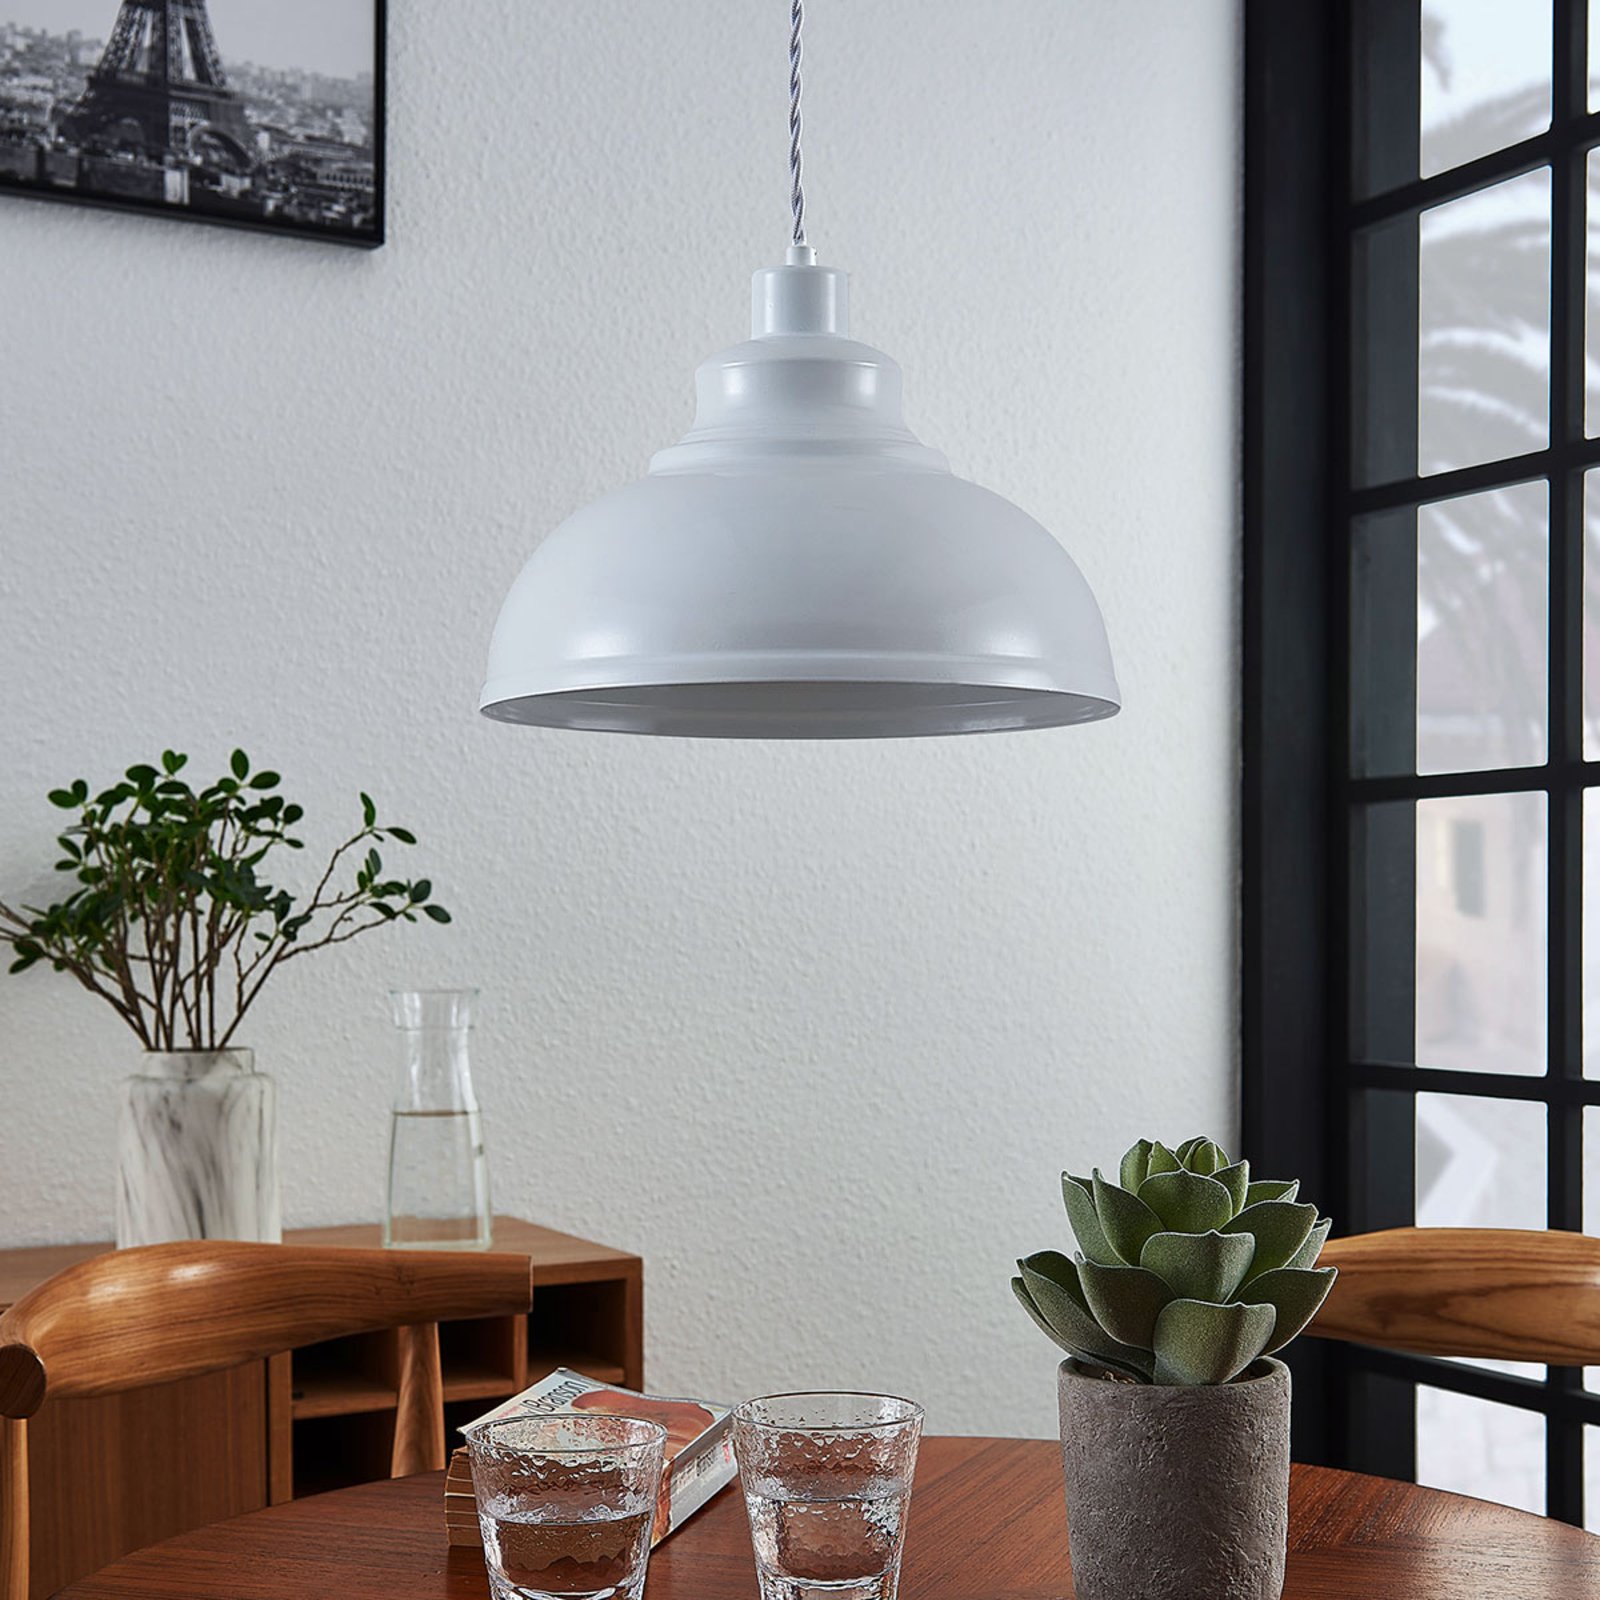 D.w.z Storing Absorberend Vintage hanglamp Albertine, metaal, wit | Lampen24.nl